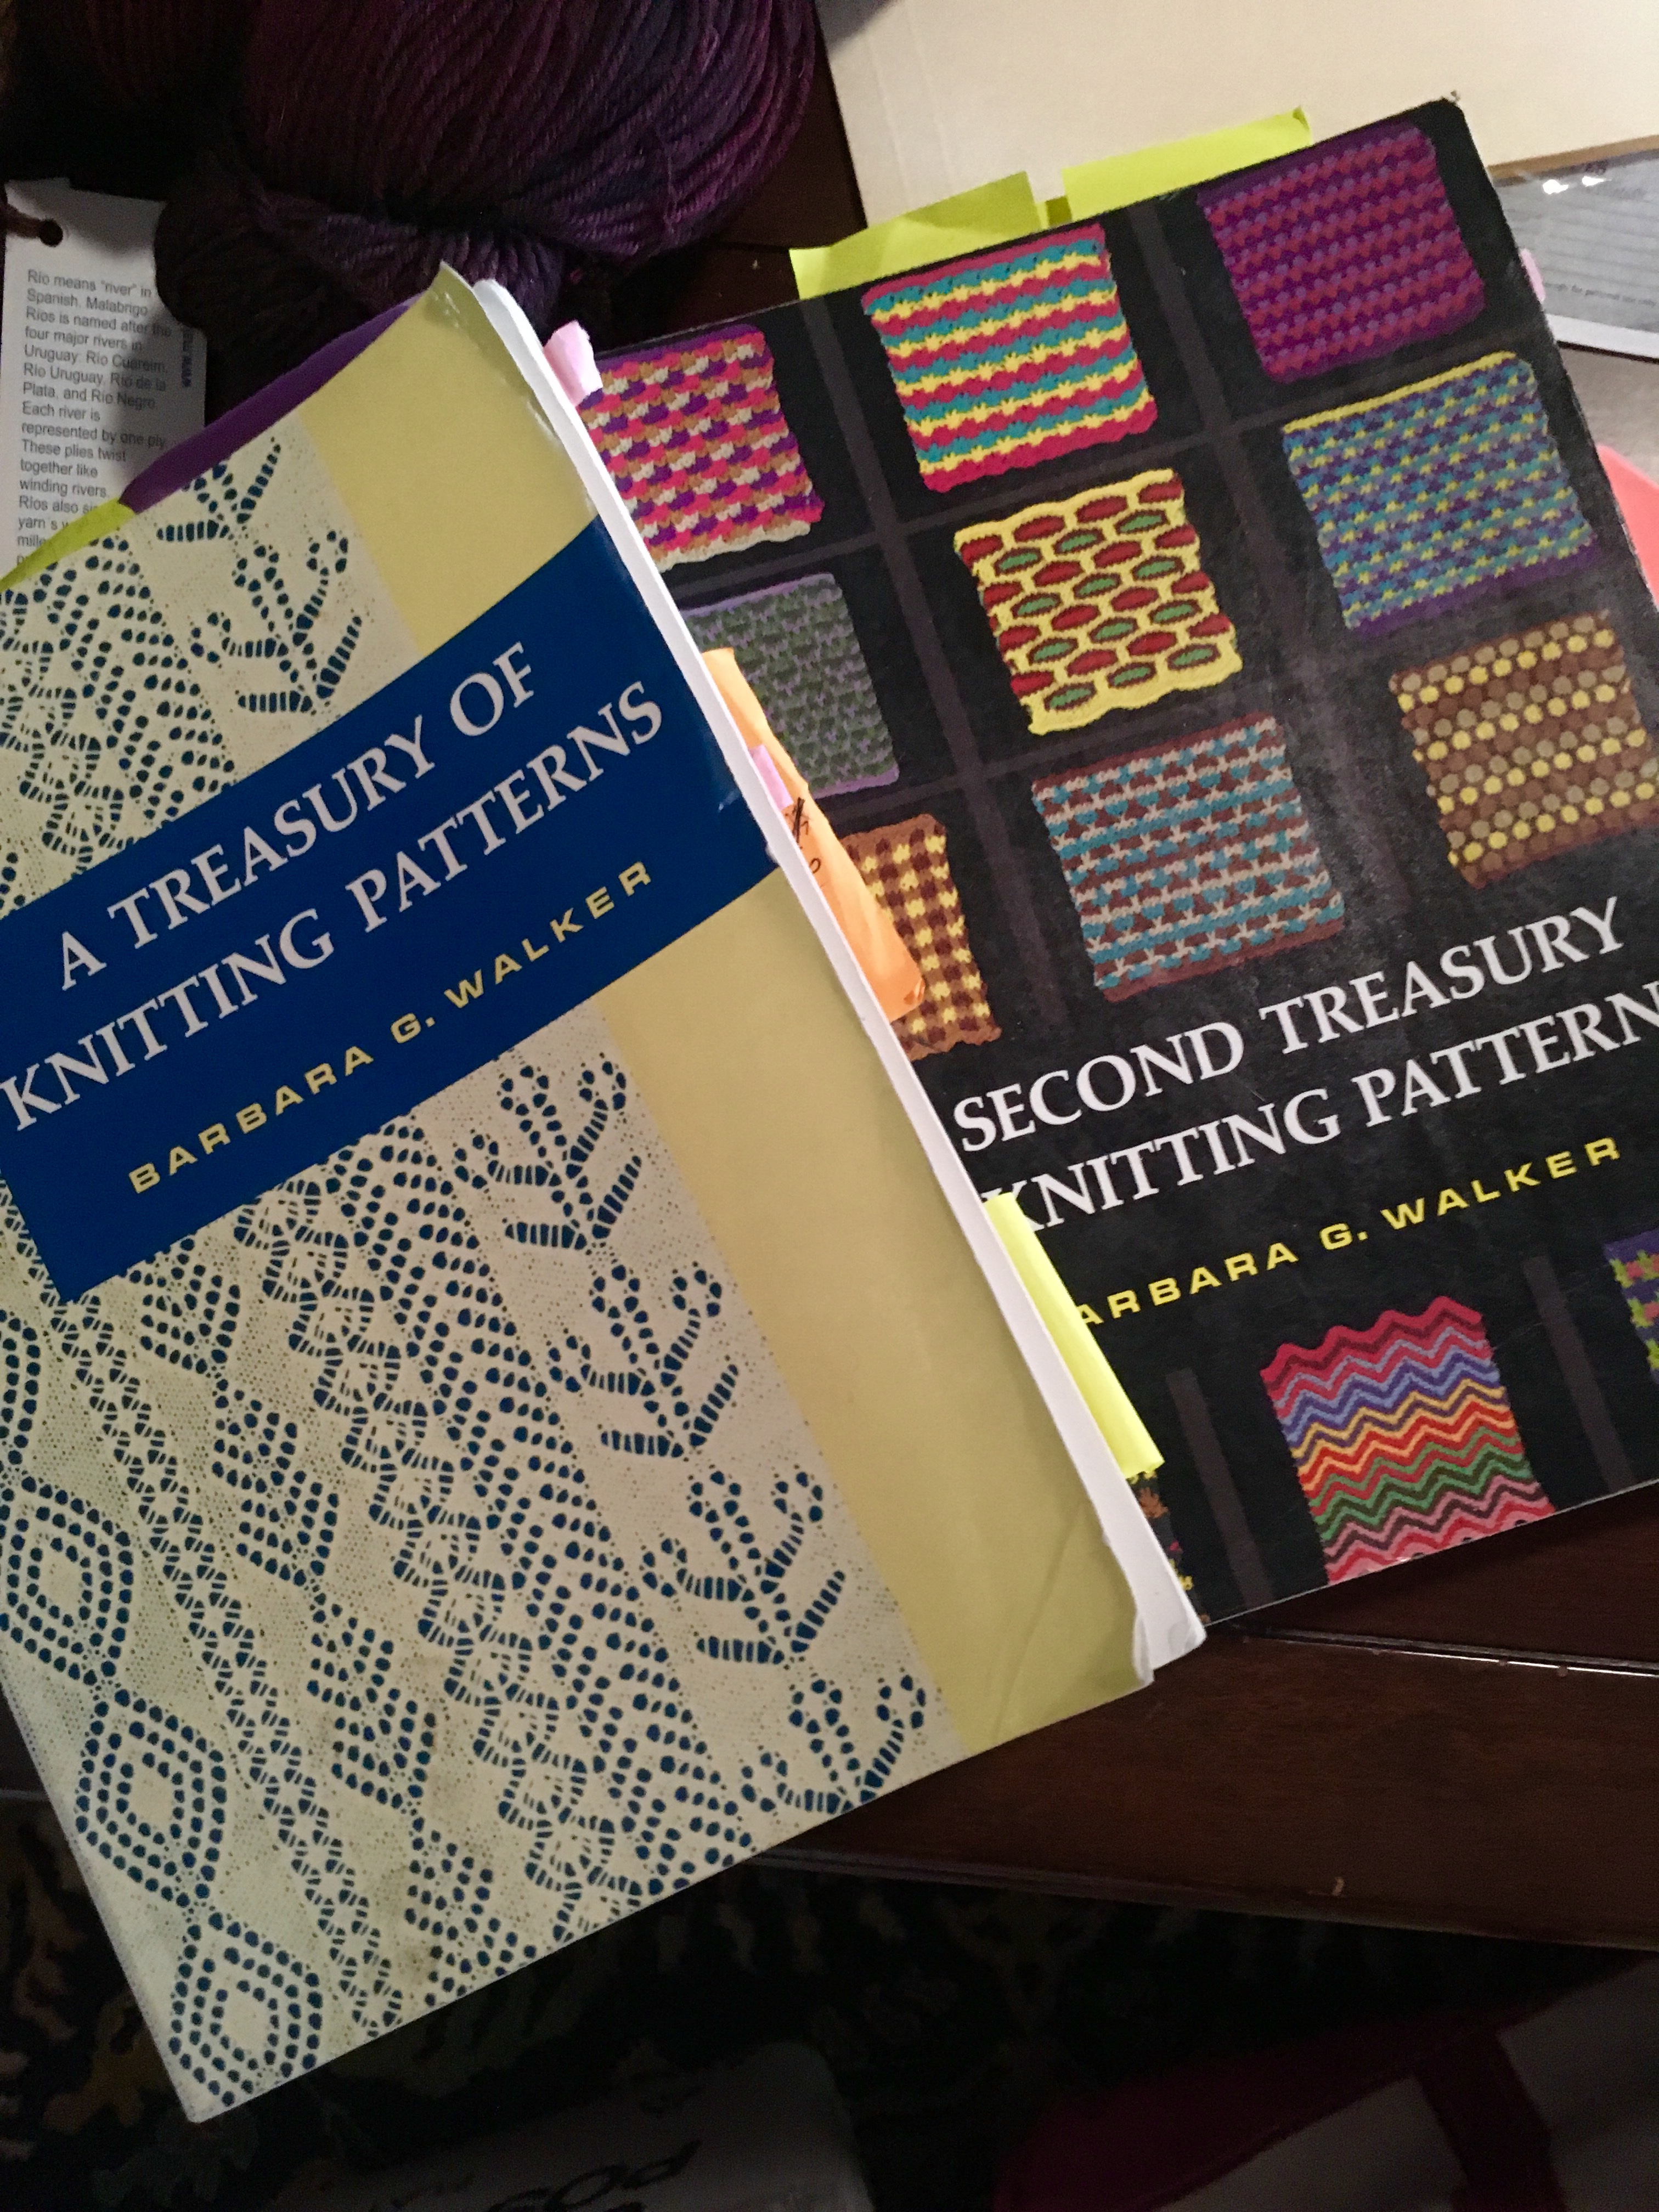 Knitting Books, Second Treasury of Knitting Patterns